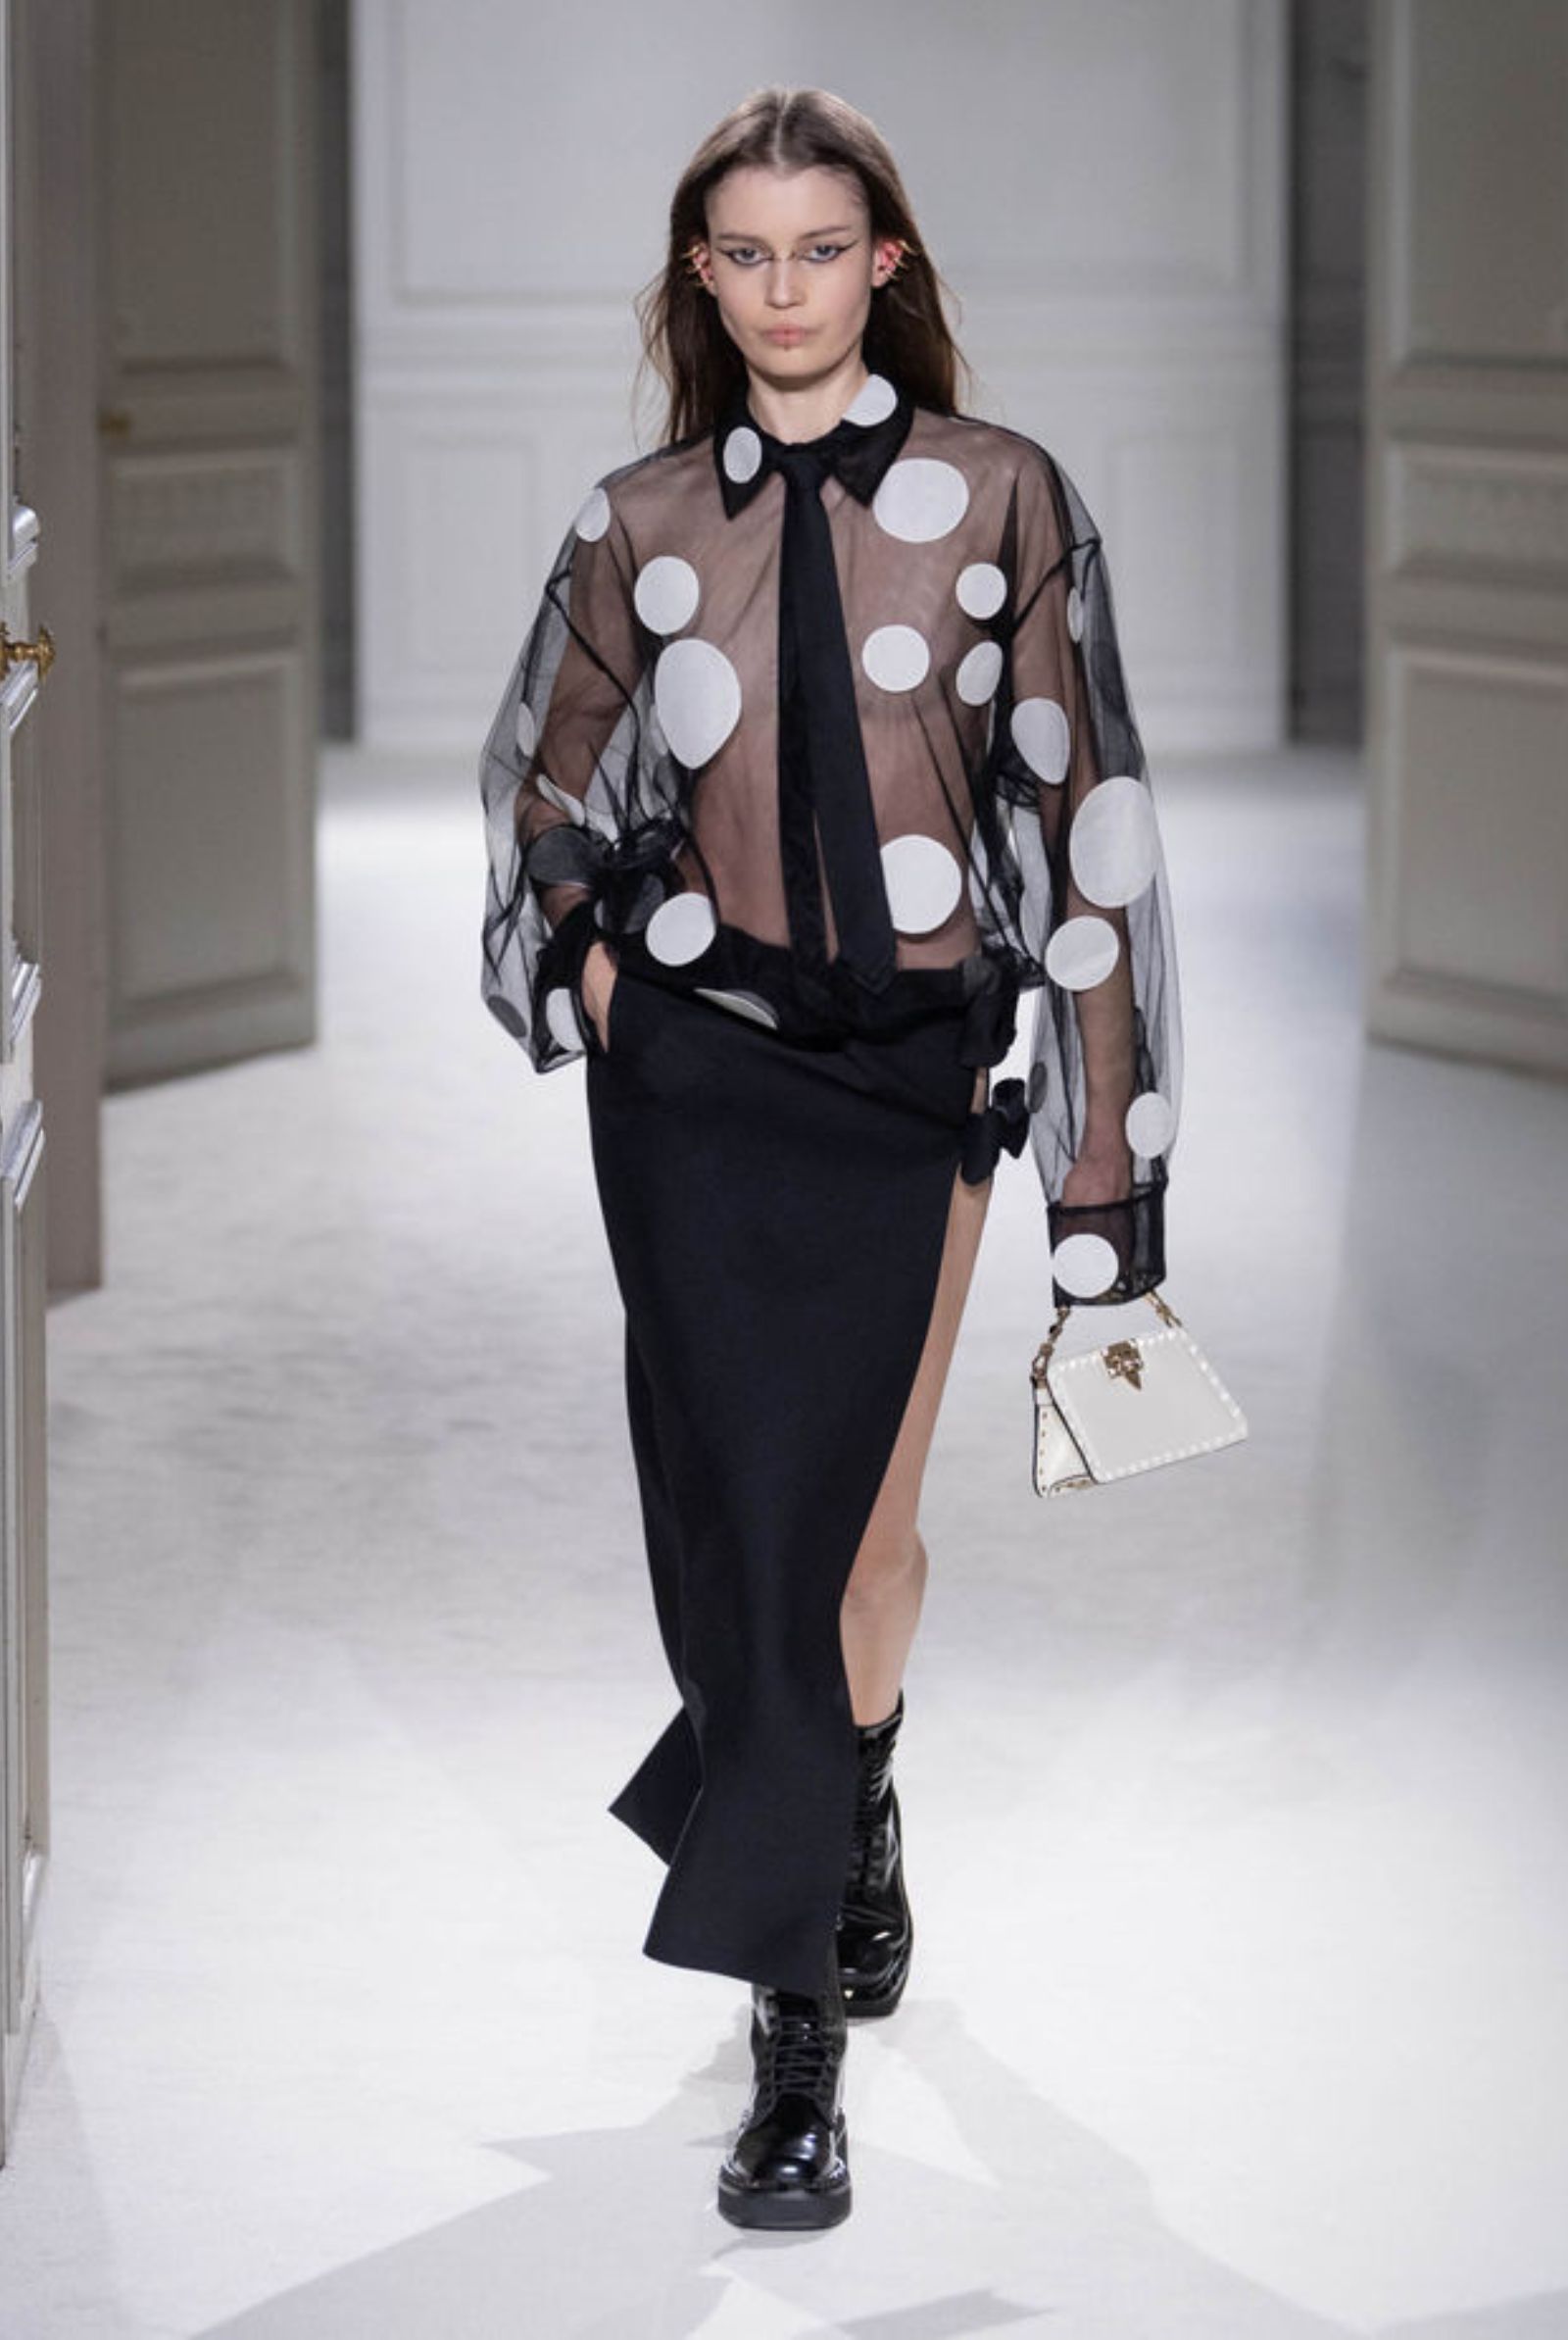 trends at Paris Fashion Week black tie